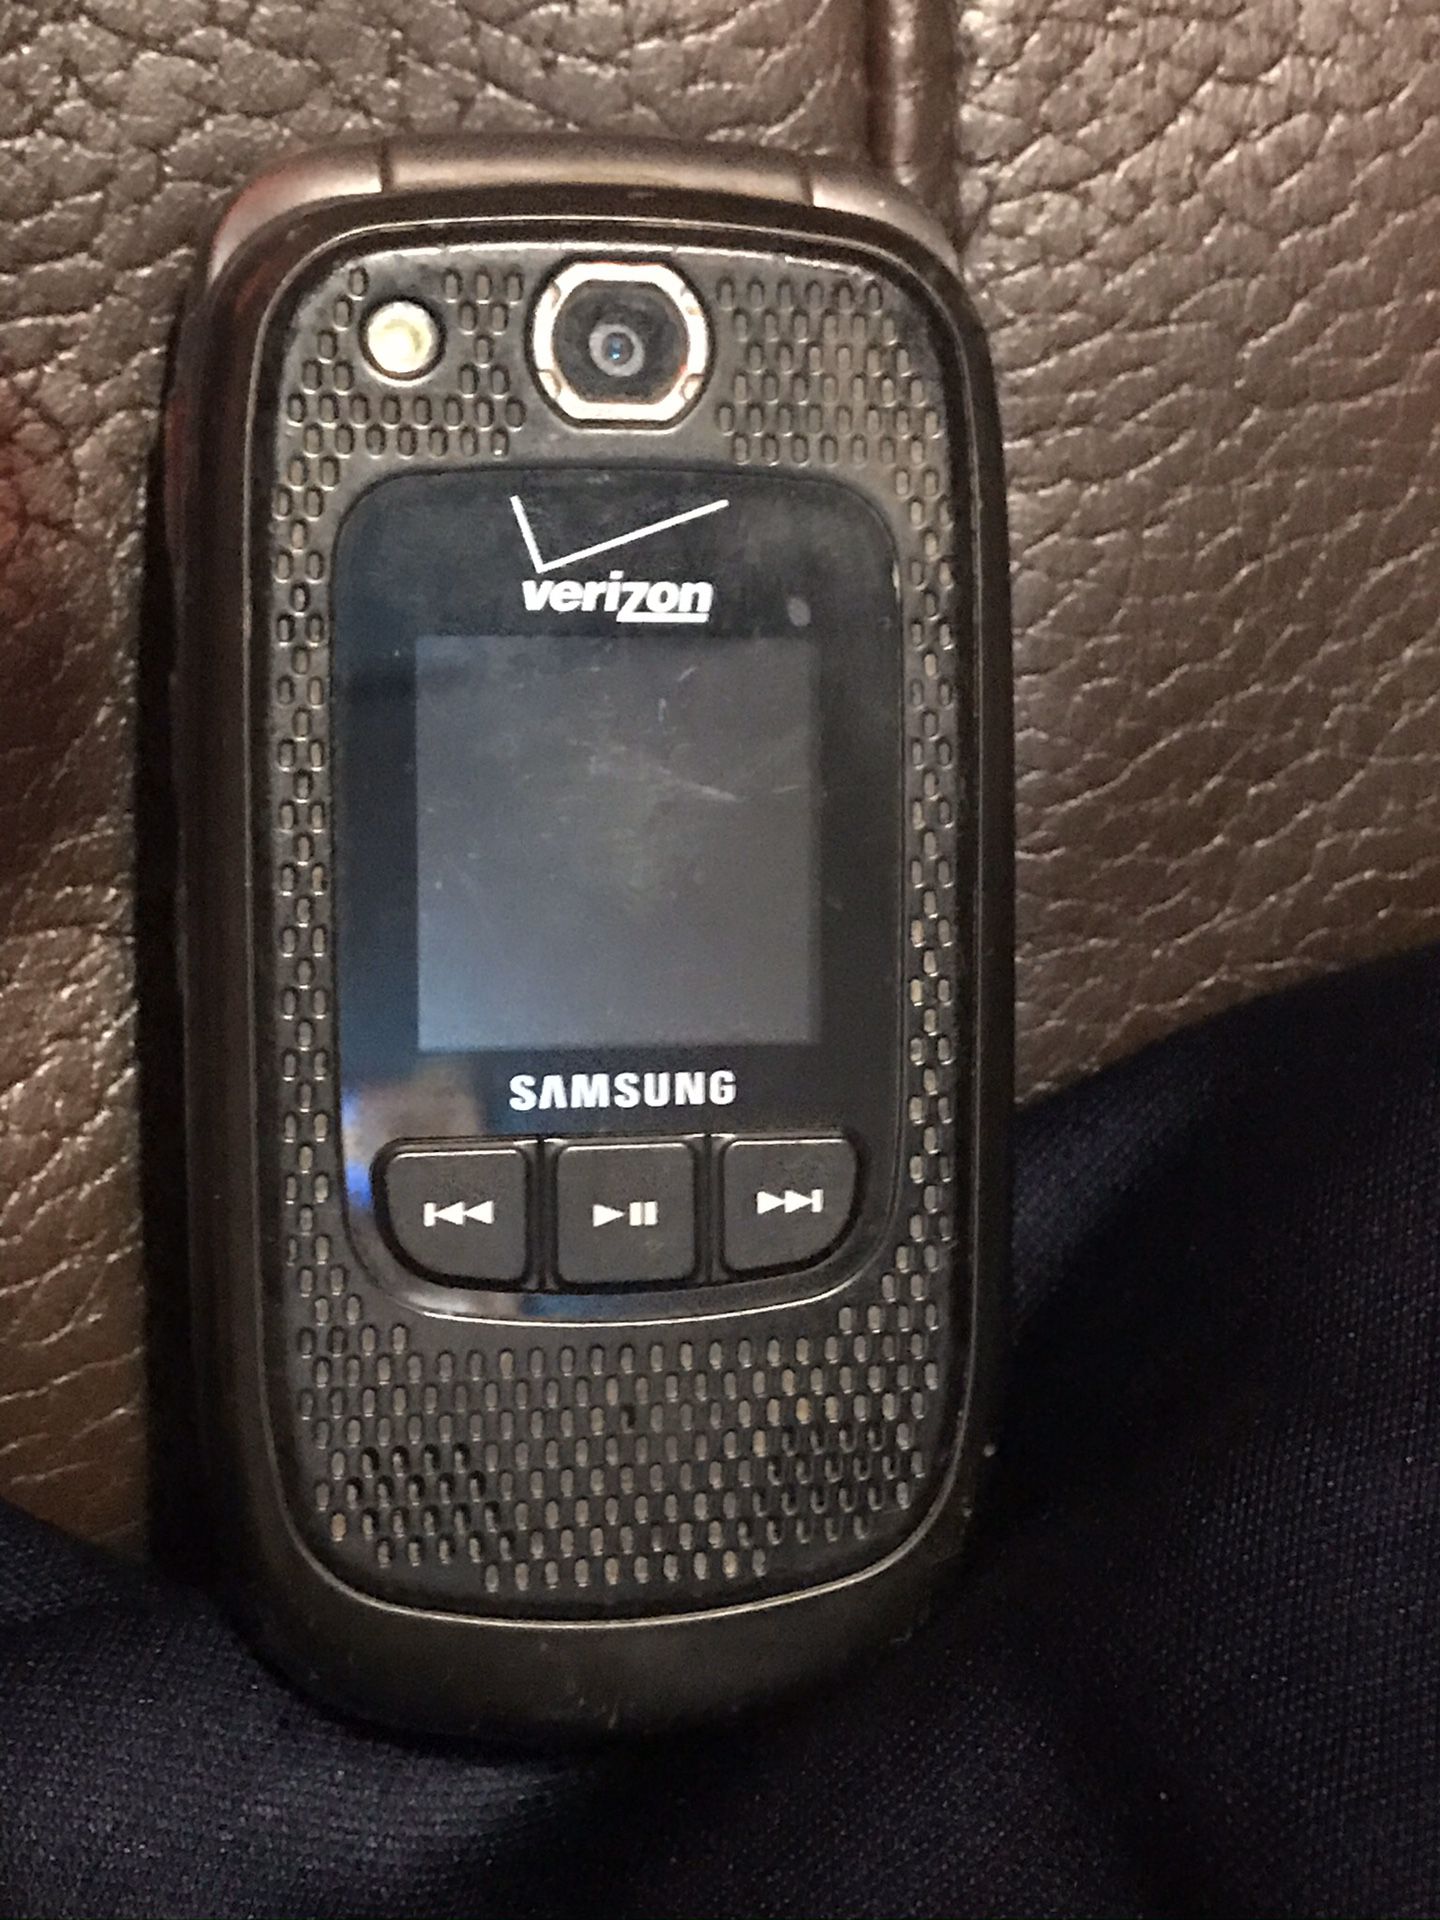 Samsung Verizon flip phone